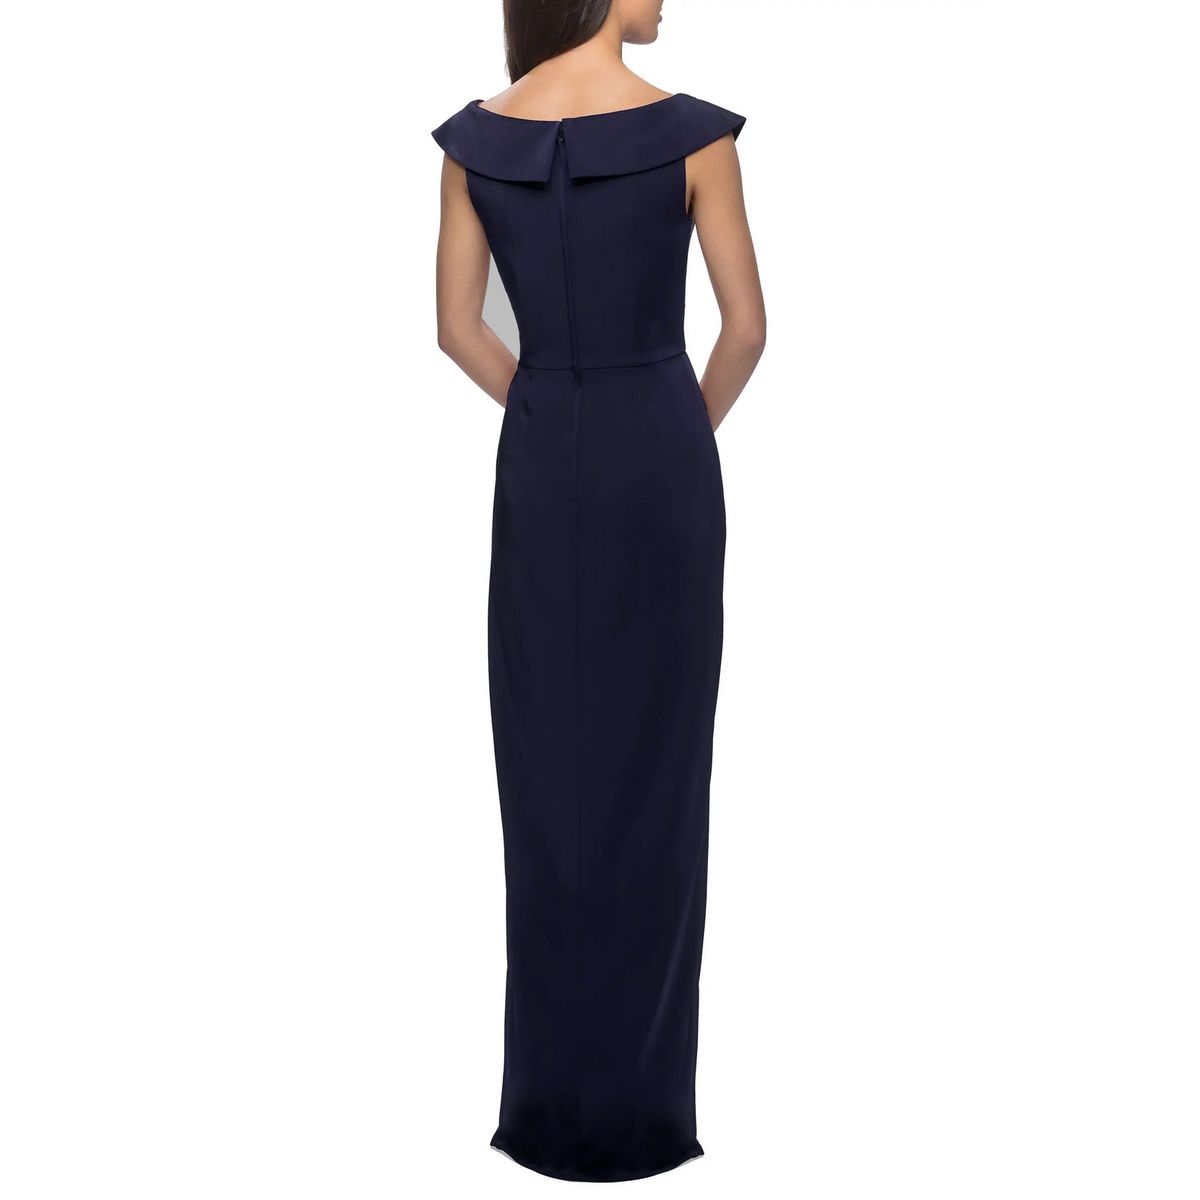 La Femme Straight Dress at Queenly | La Femme 25206 | Prom Dress | Size 14 | Color: Blue